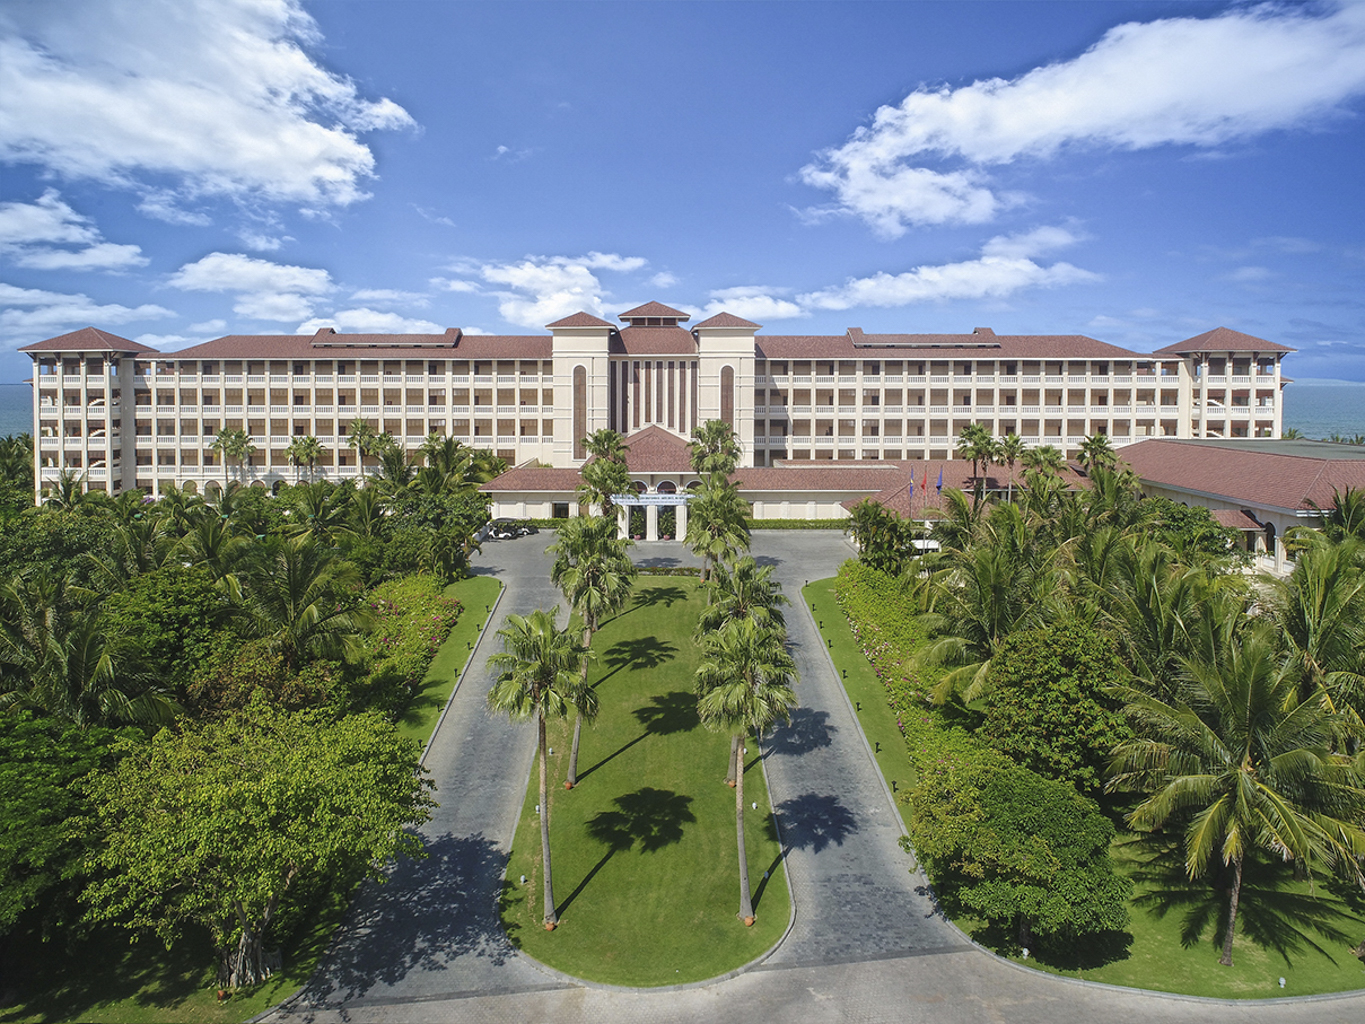 Danang Marriott Resort & Spa